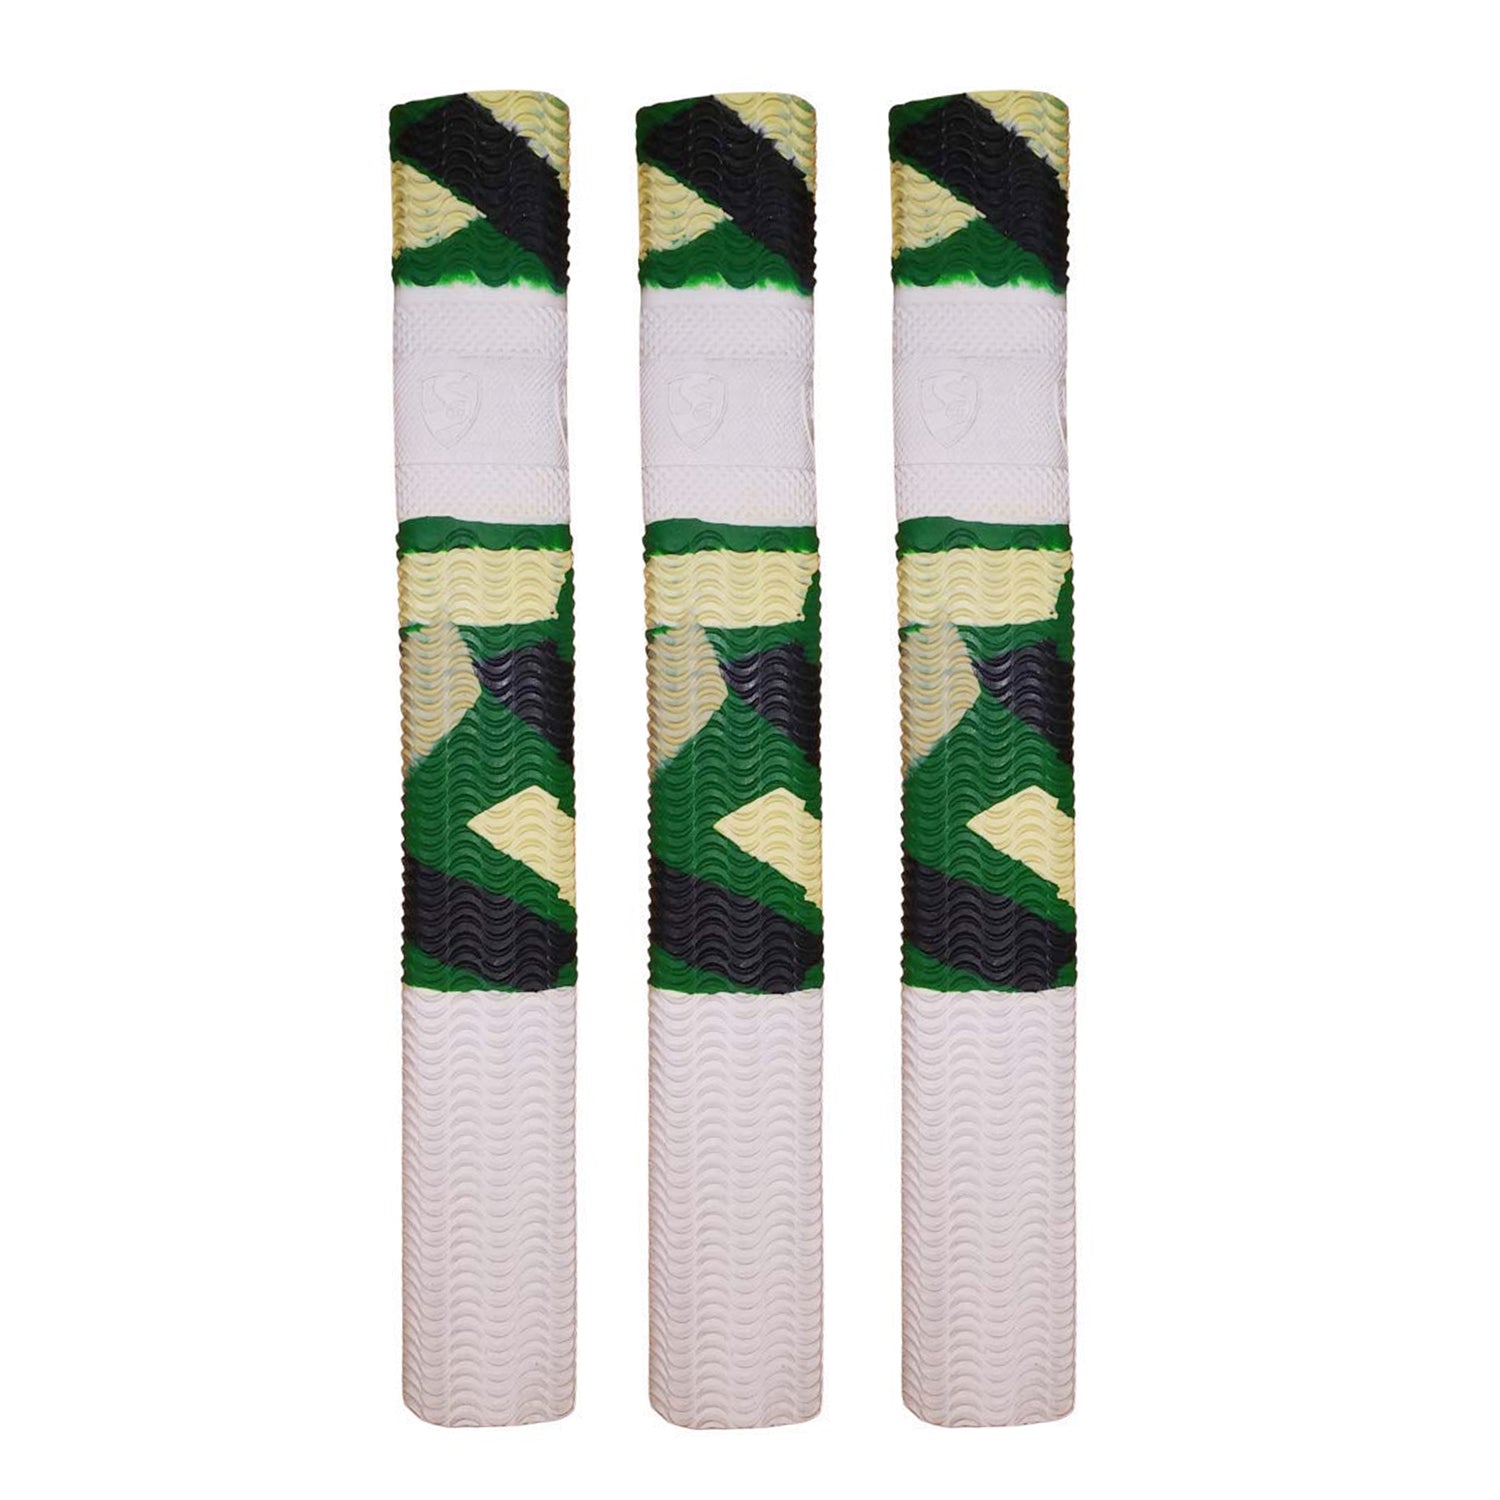 SG Cricket Bat Grip Chemo, 3pc set - Best Price online Prokicksports.com